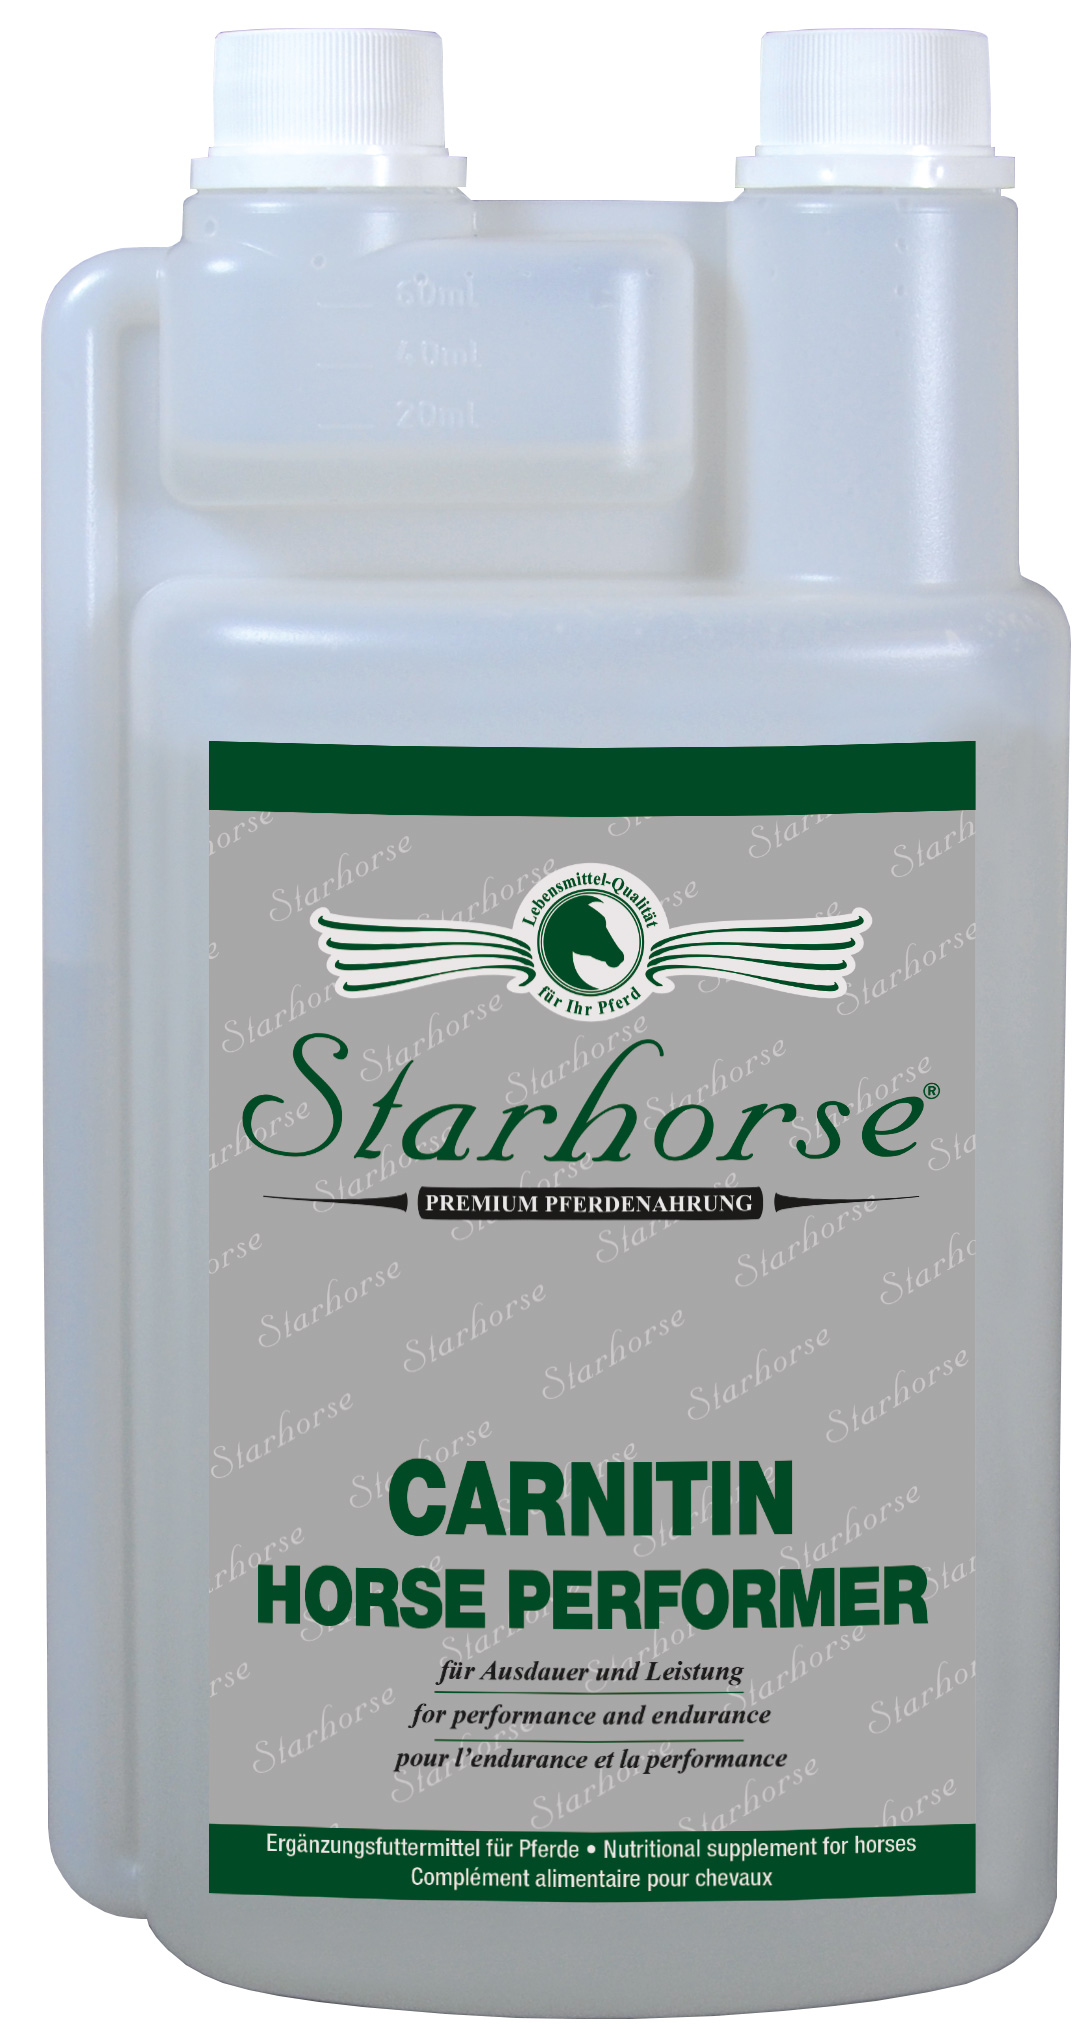 Starhorse Carnitin Horse Performer, 1l